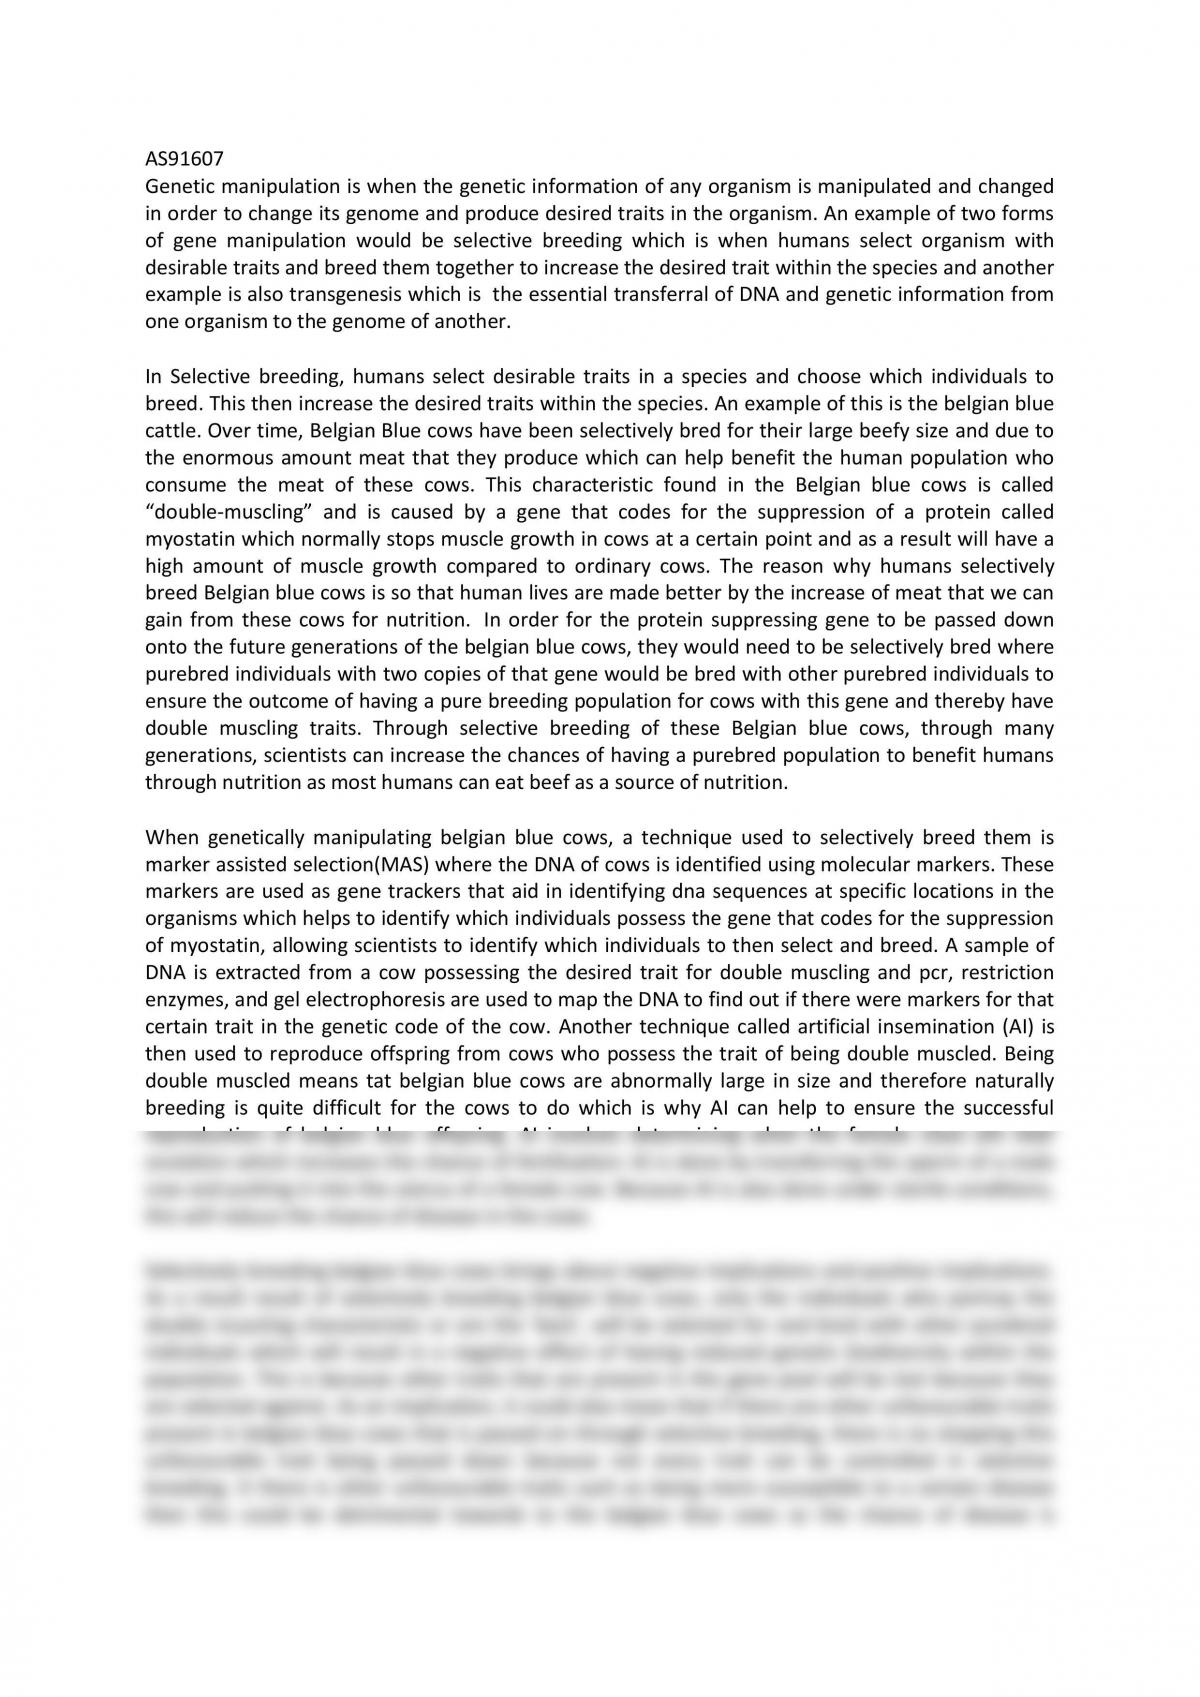 Level 3 biology scientific report standard on genetic manipulation - Page 1